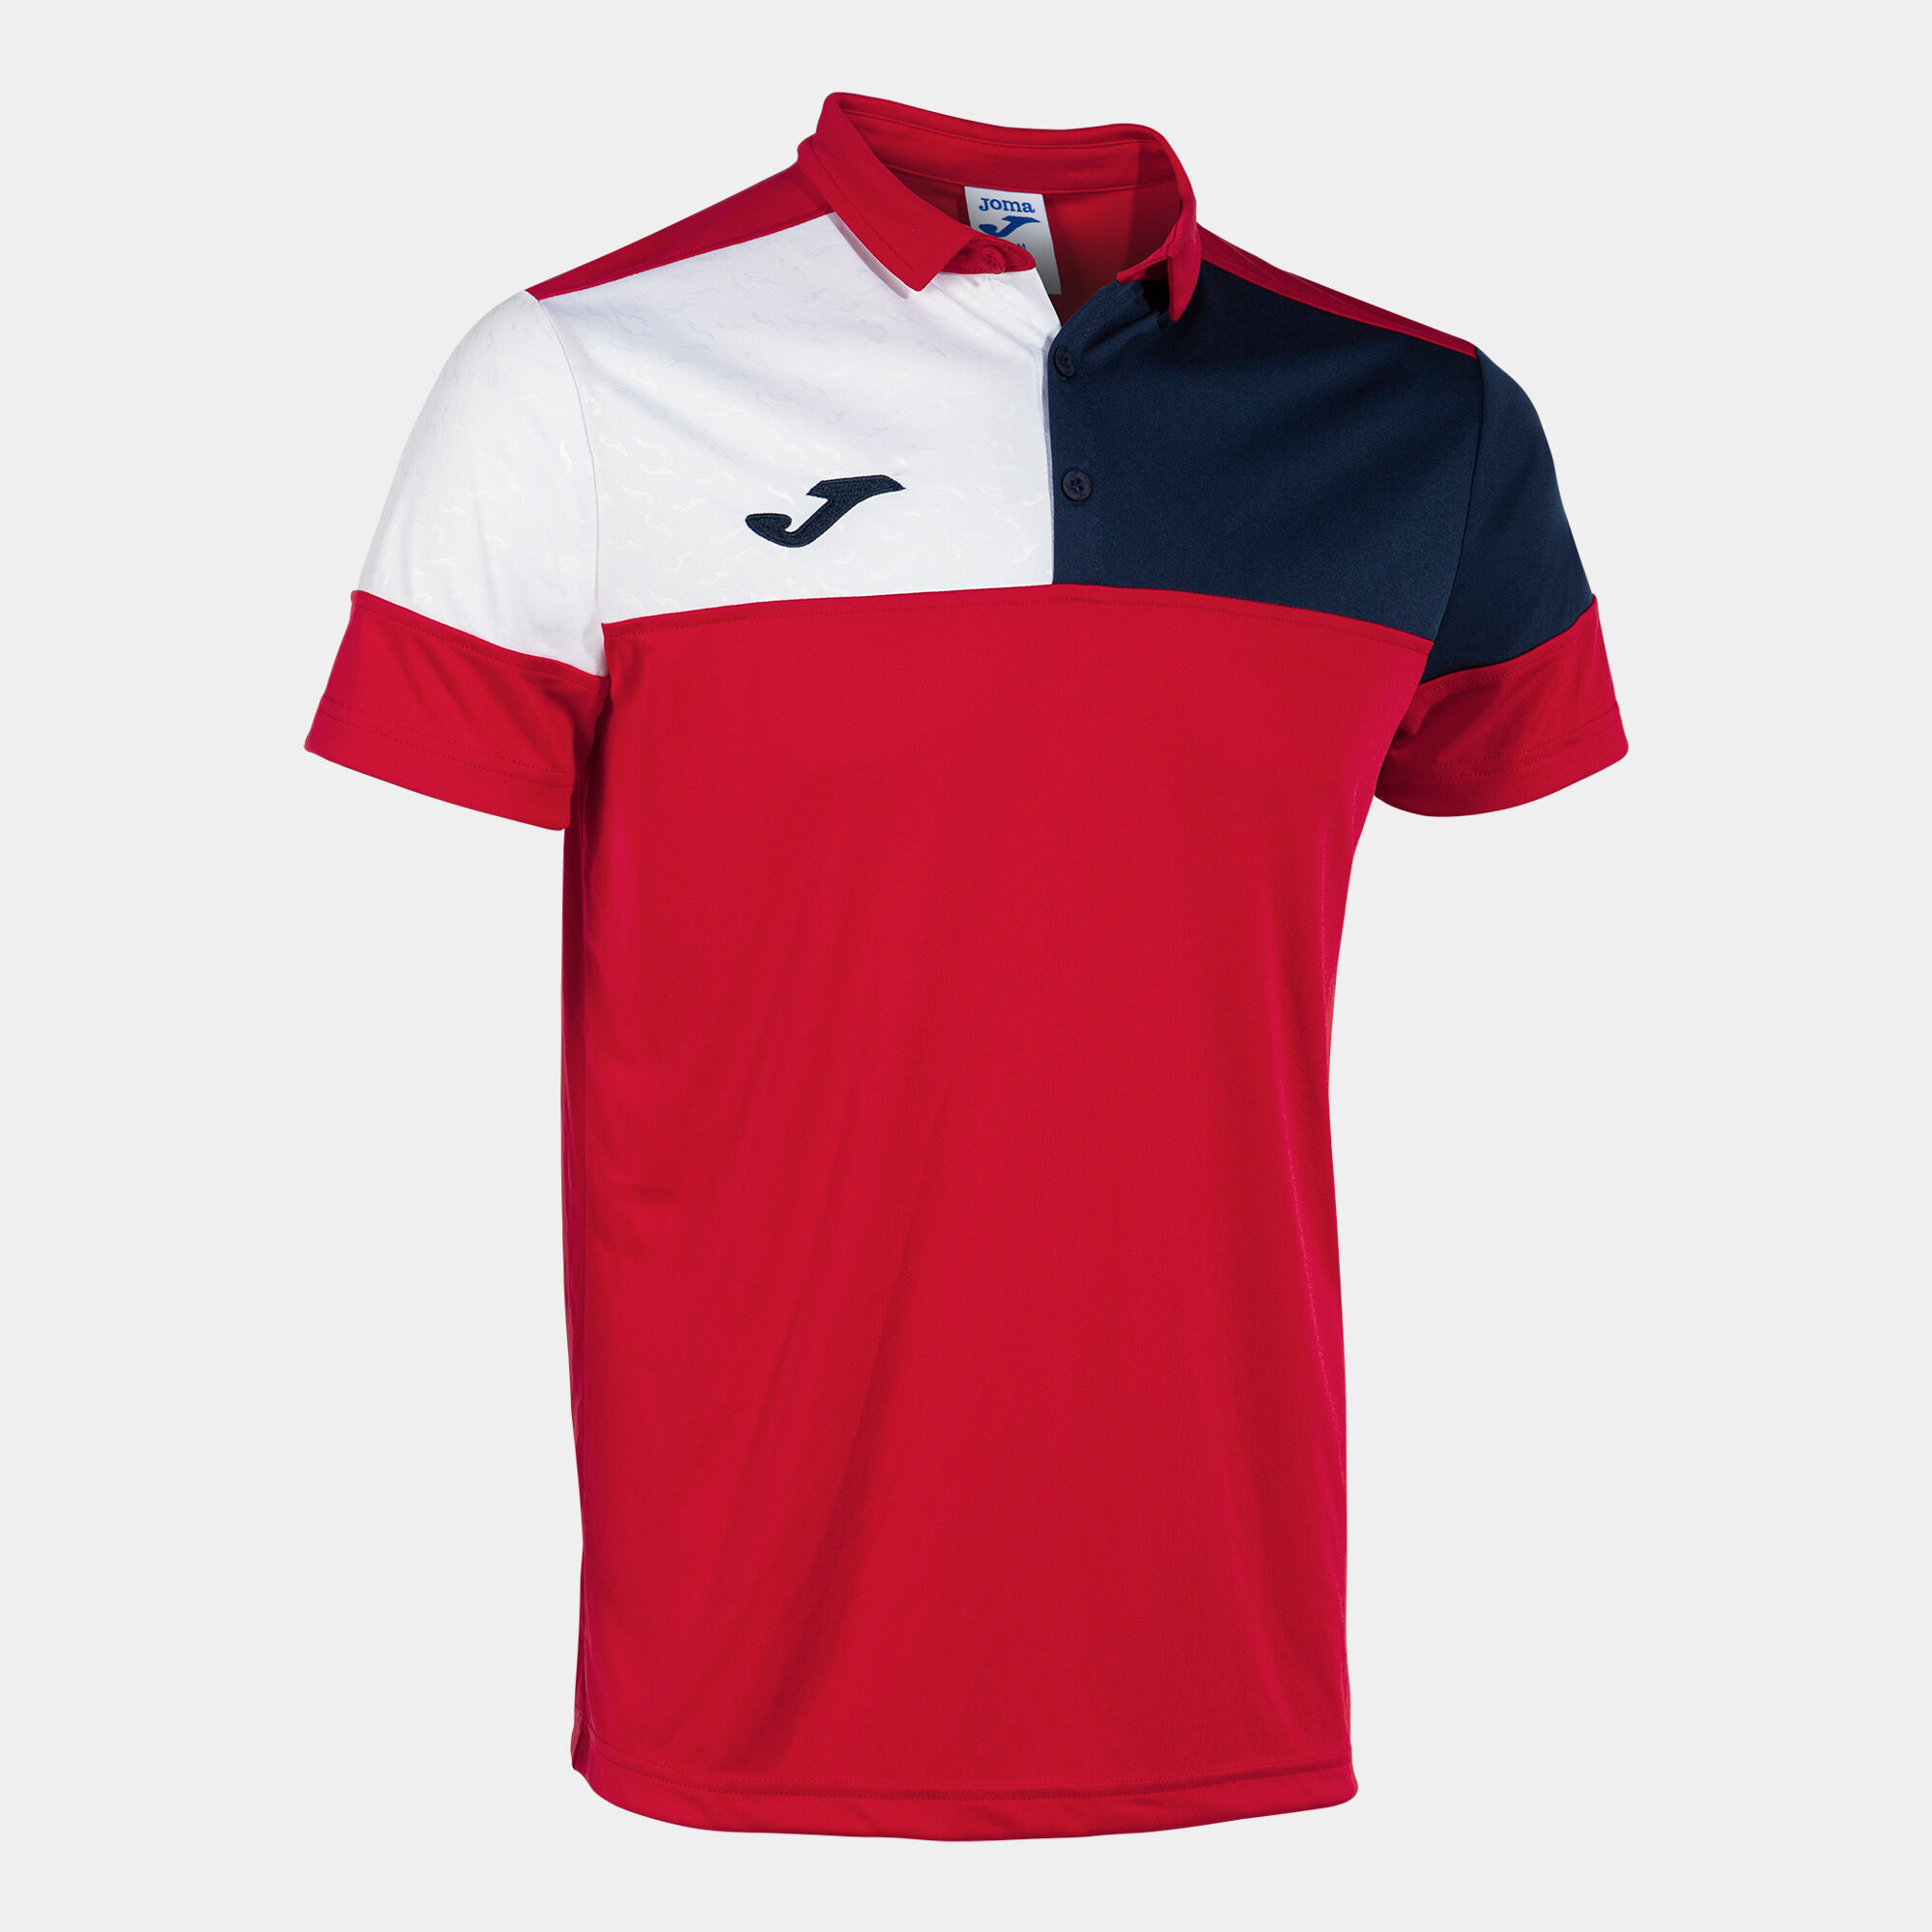 Polo shirt short-sleeve man Crew V red navy blue